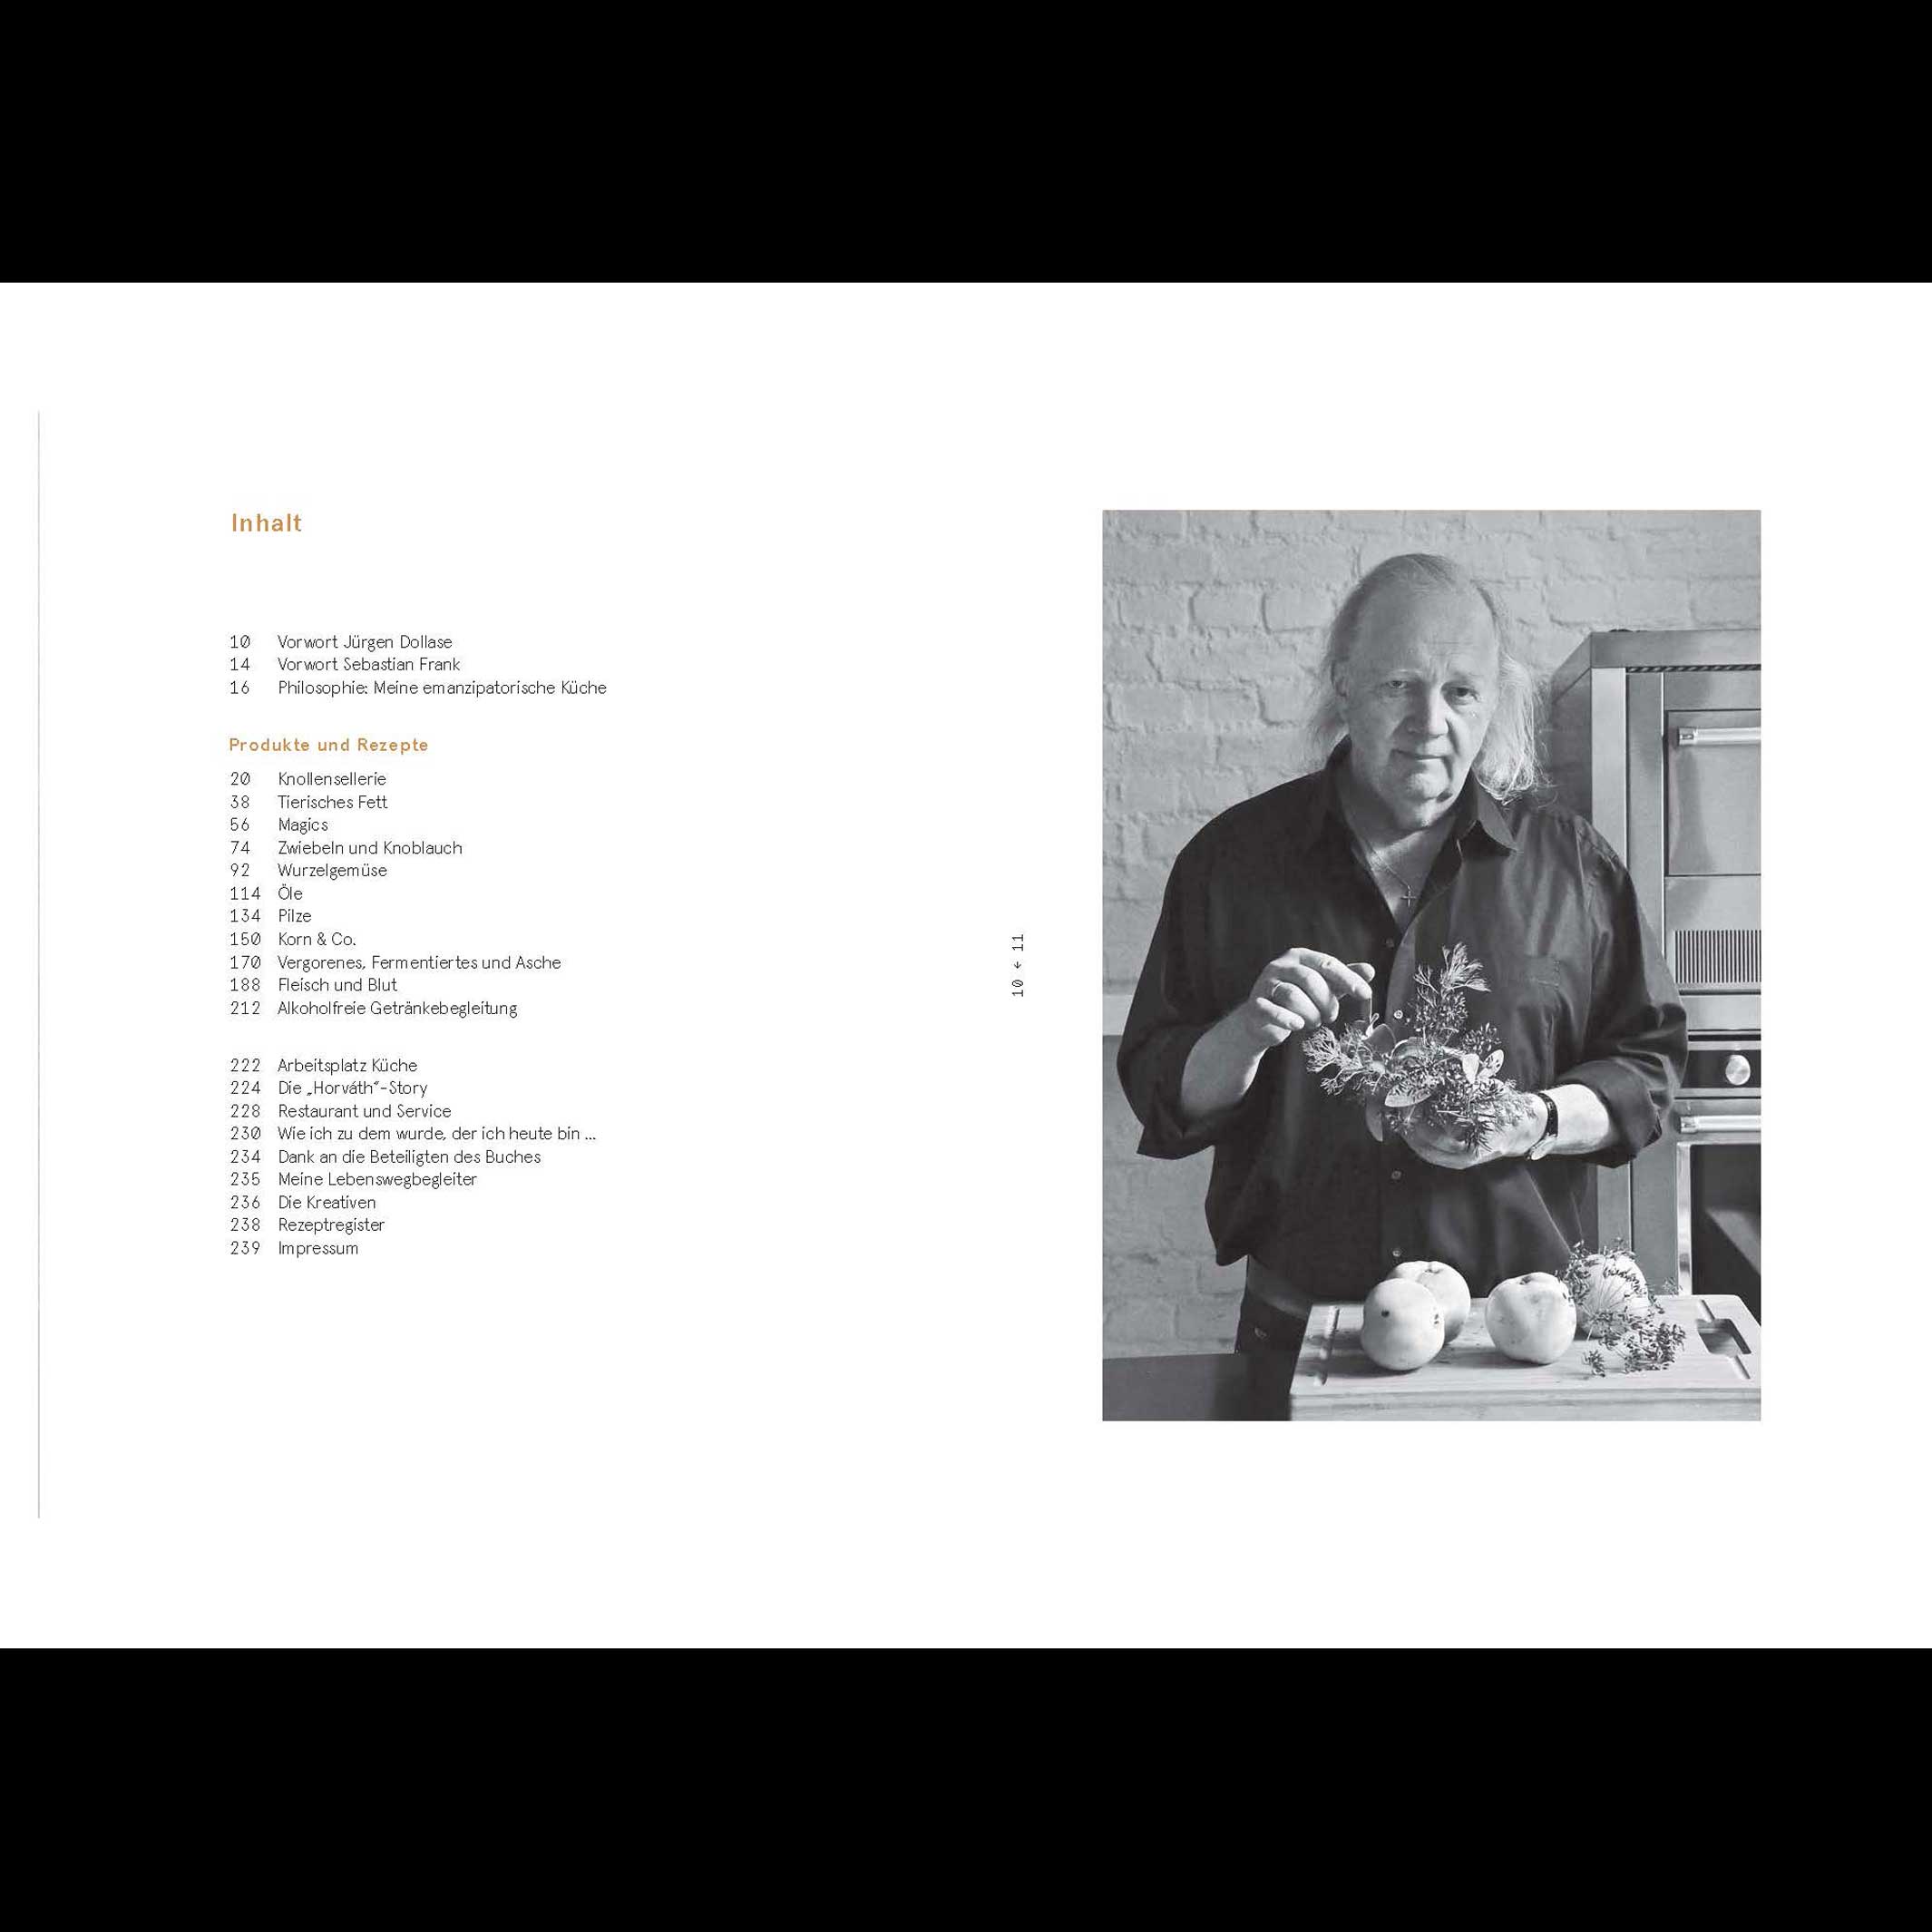 kuk [cook] | KOCHBUCH von Sebastian Frank  | DK Verlag